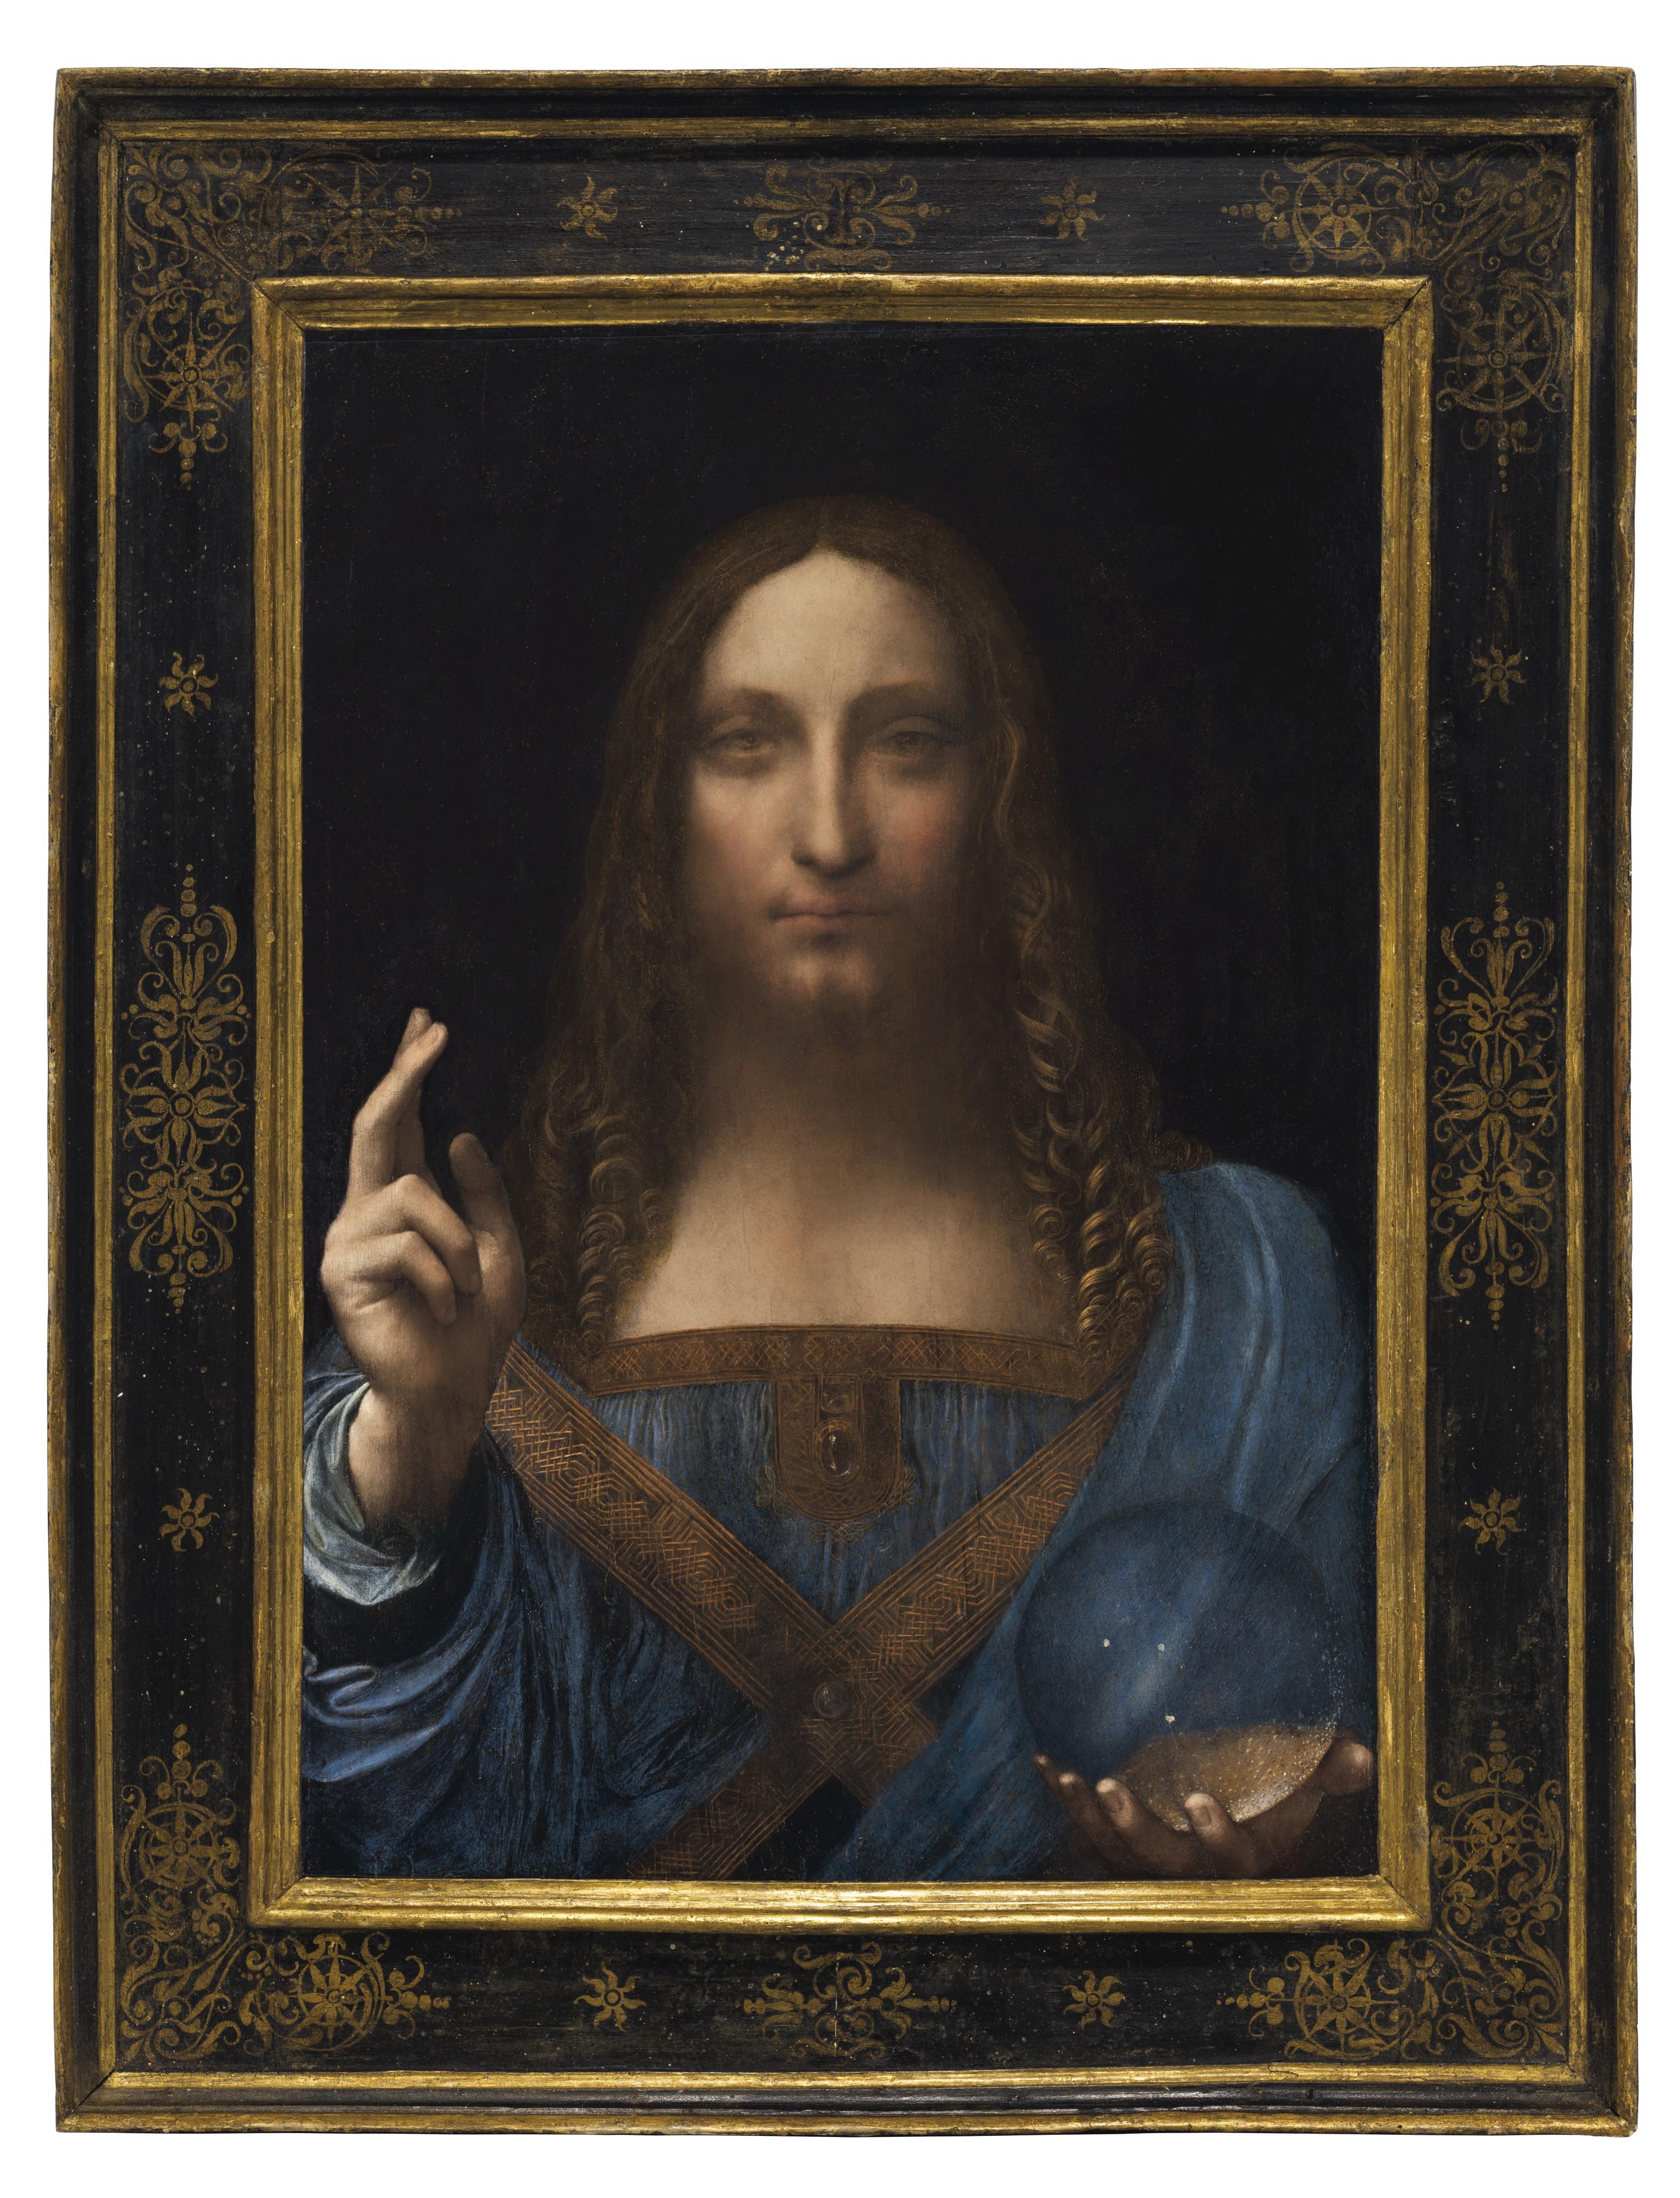 Da Vinci Painting: Lost Salvator Mundi Goes Up for Auction